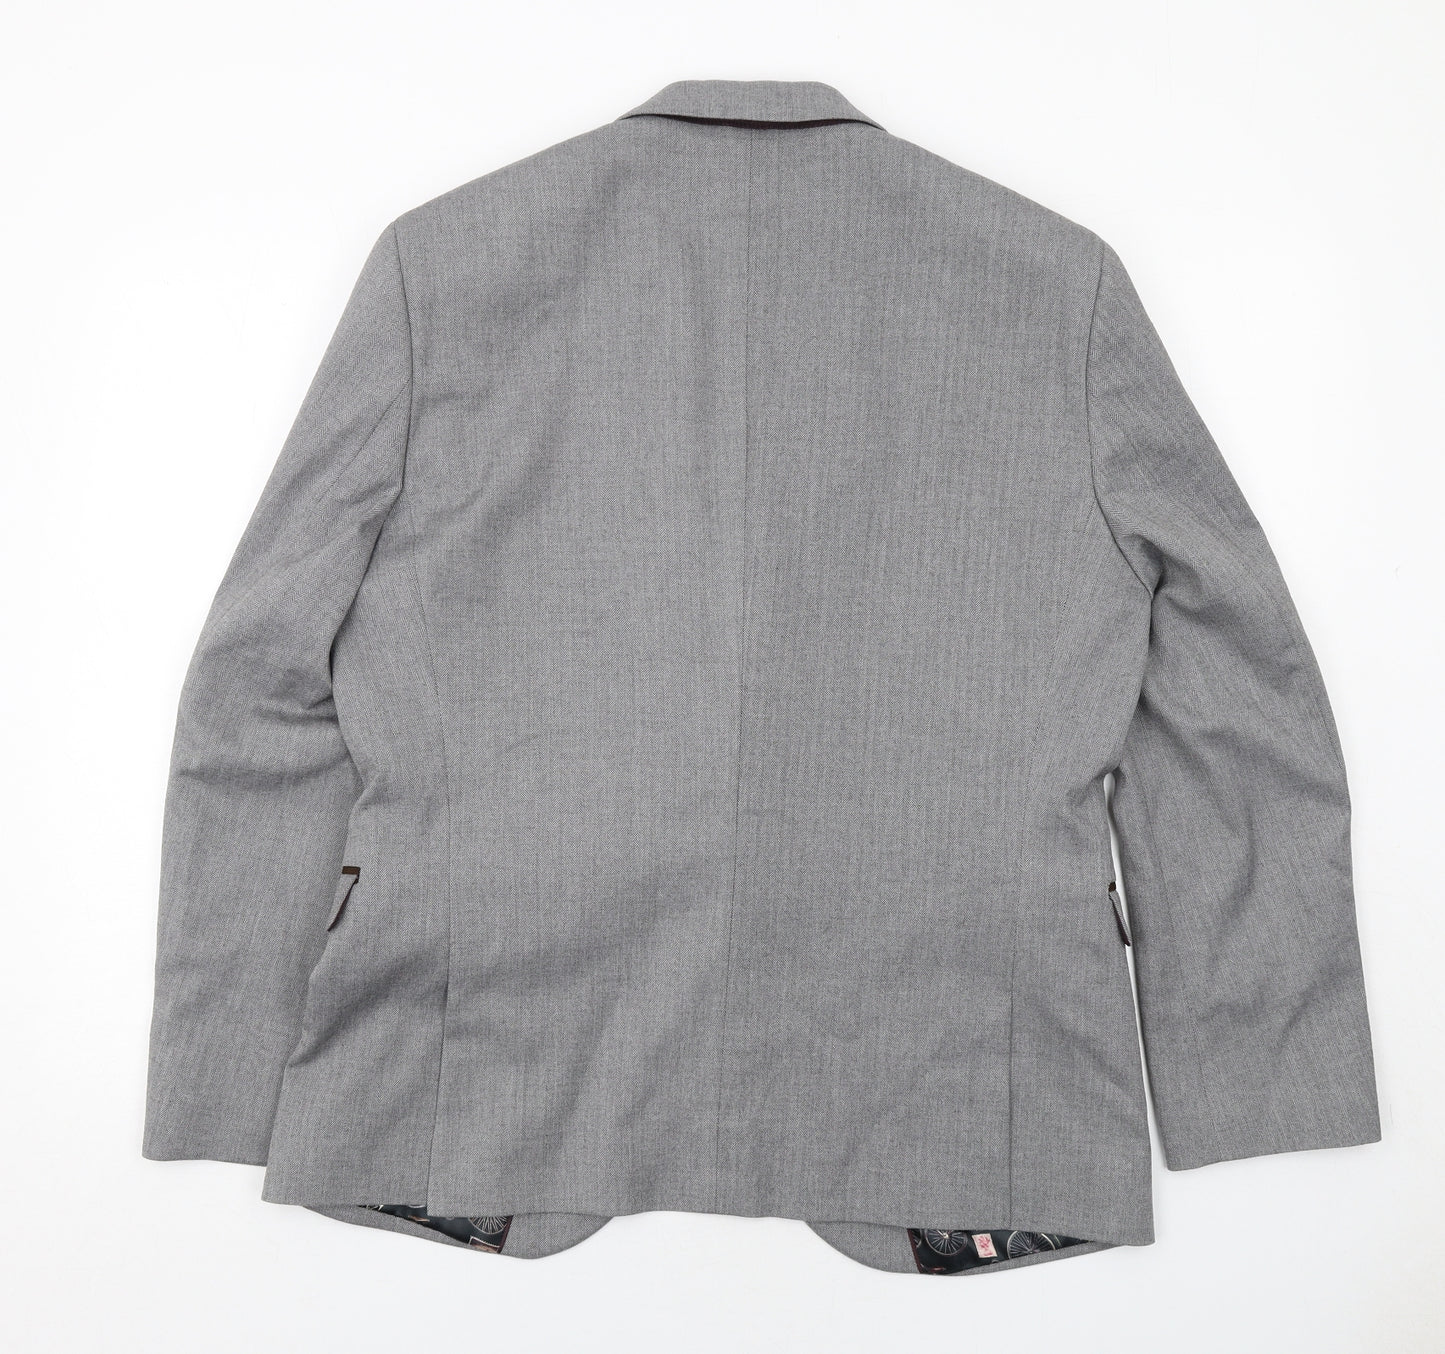 NEXT Mens Grey Striped Polyester Jacket Suit Jacket Size 42 Regular